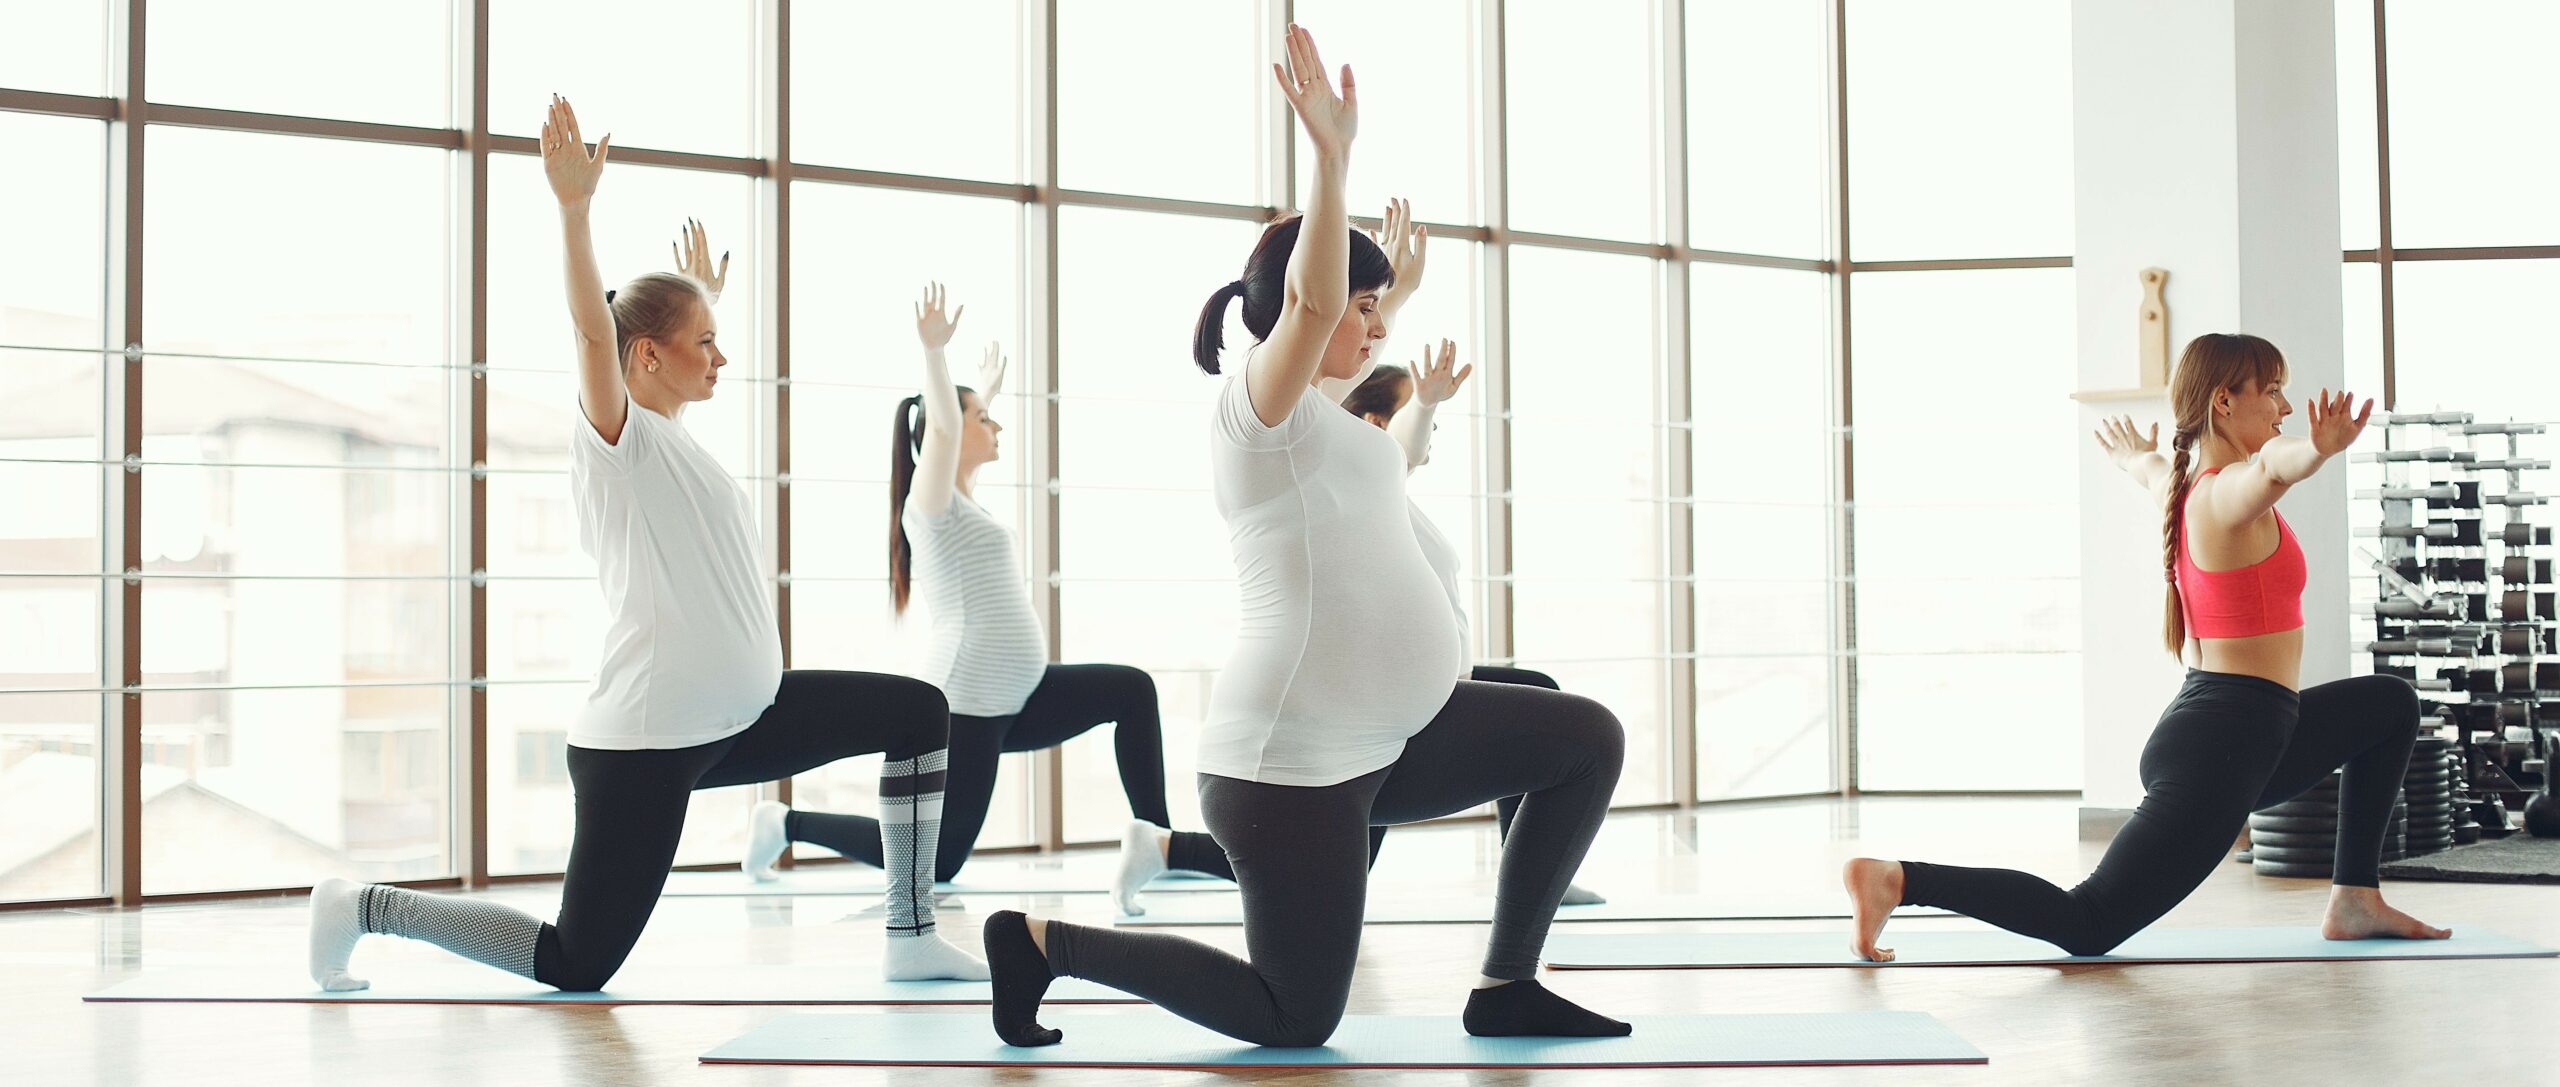 yoga-prenatal-groupe-chevalier-servant-rs